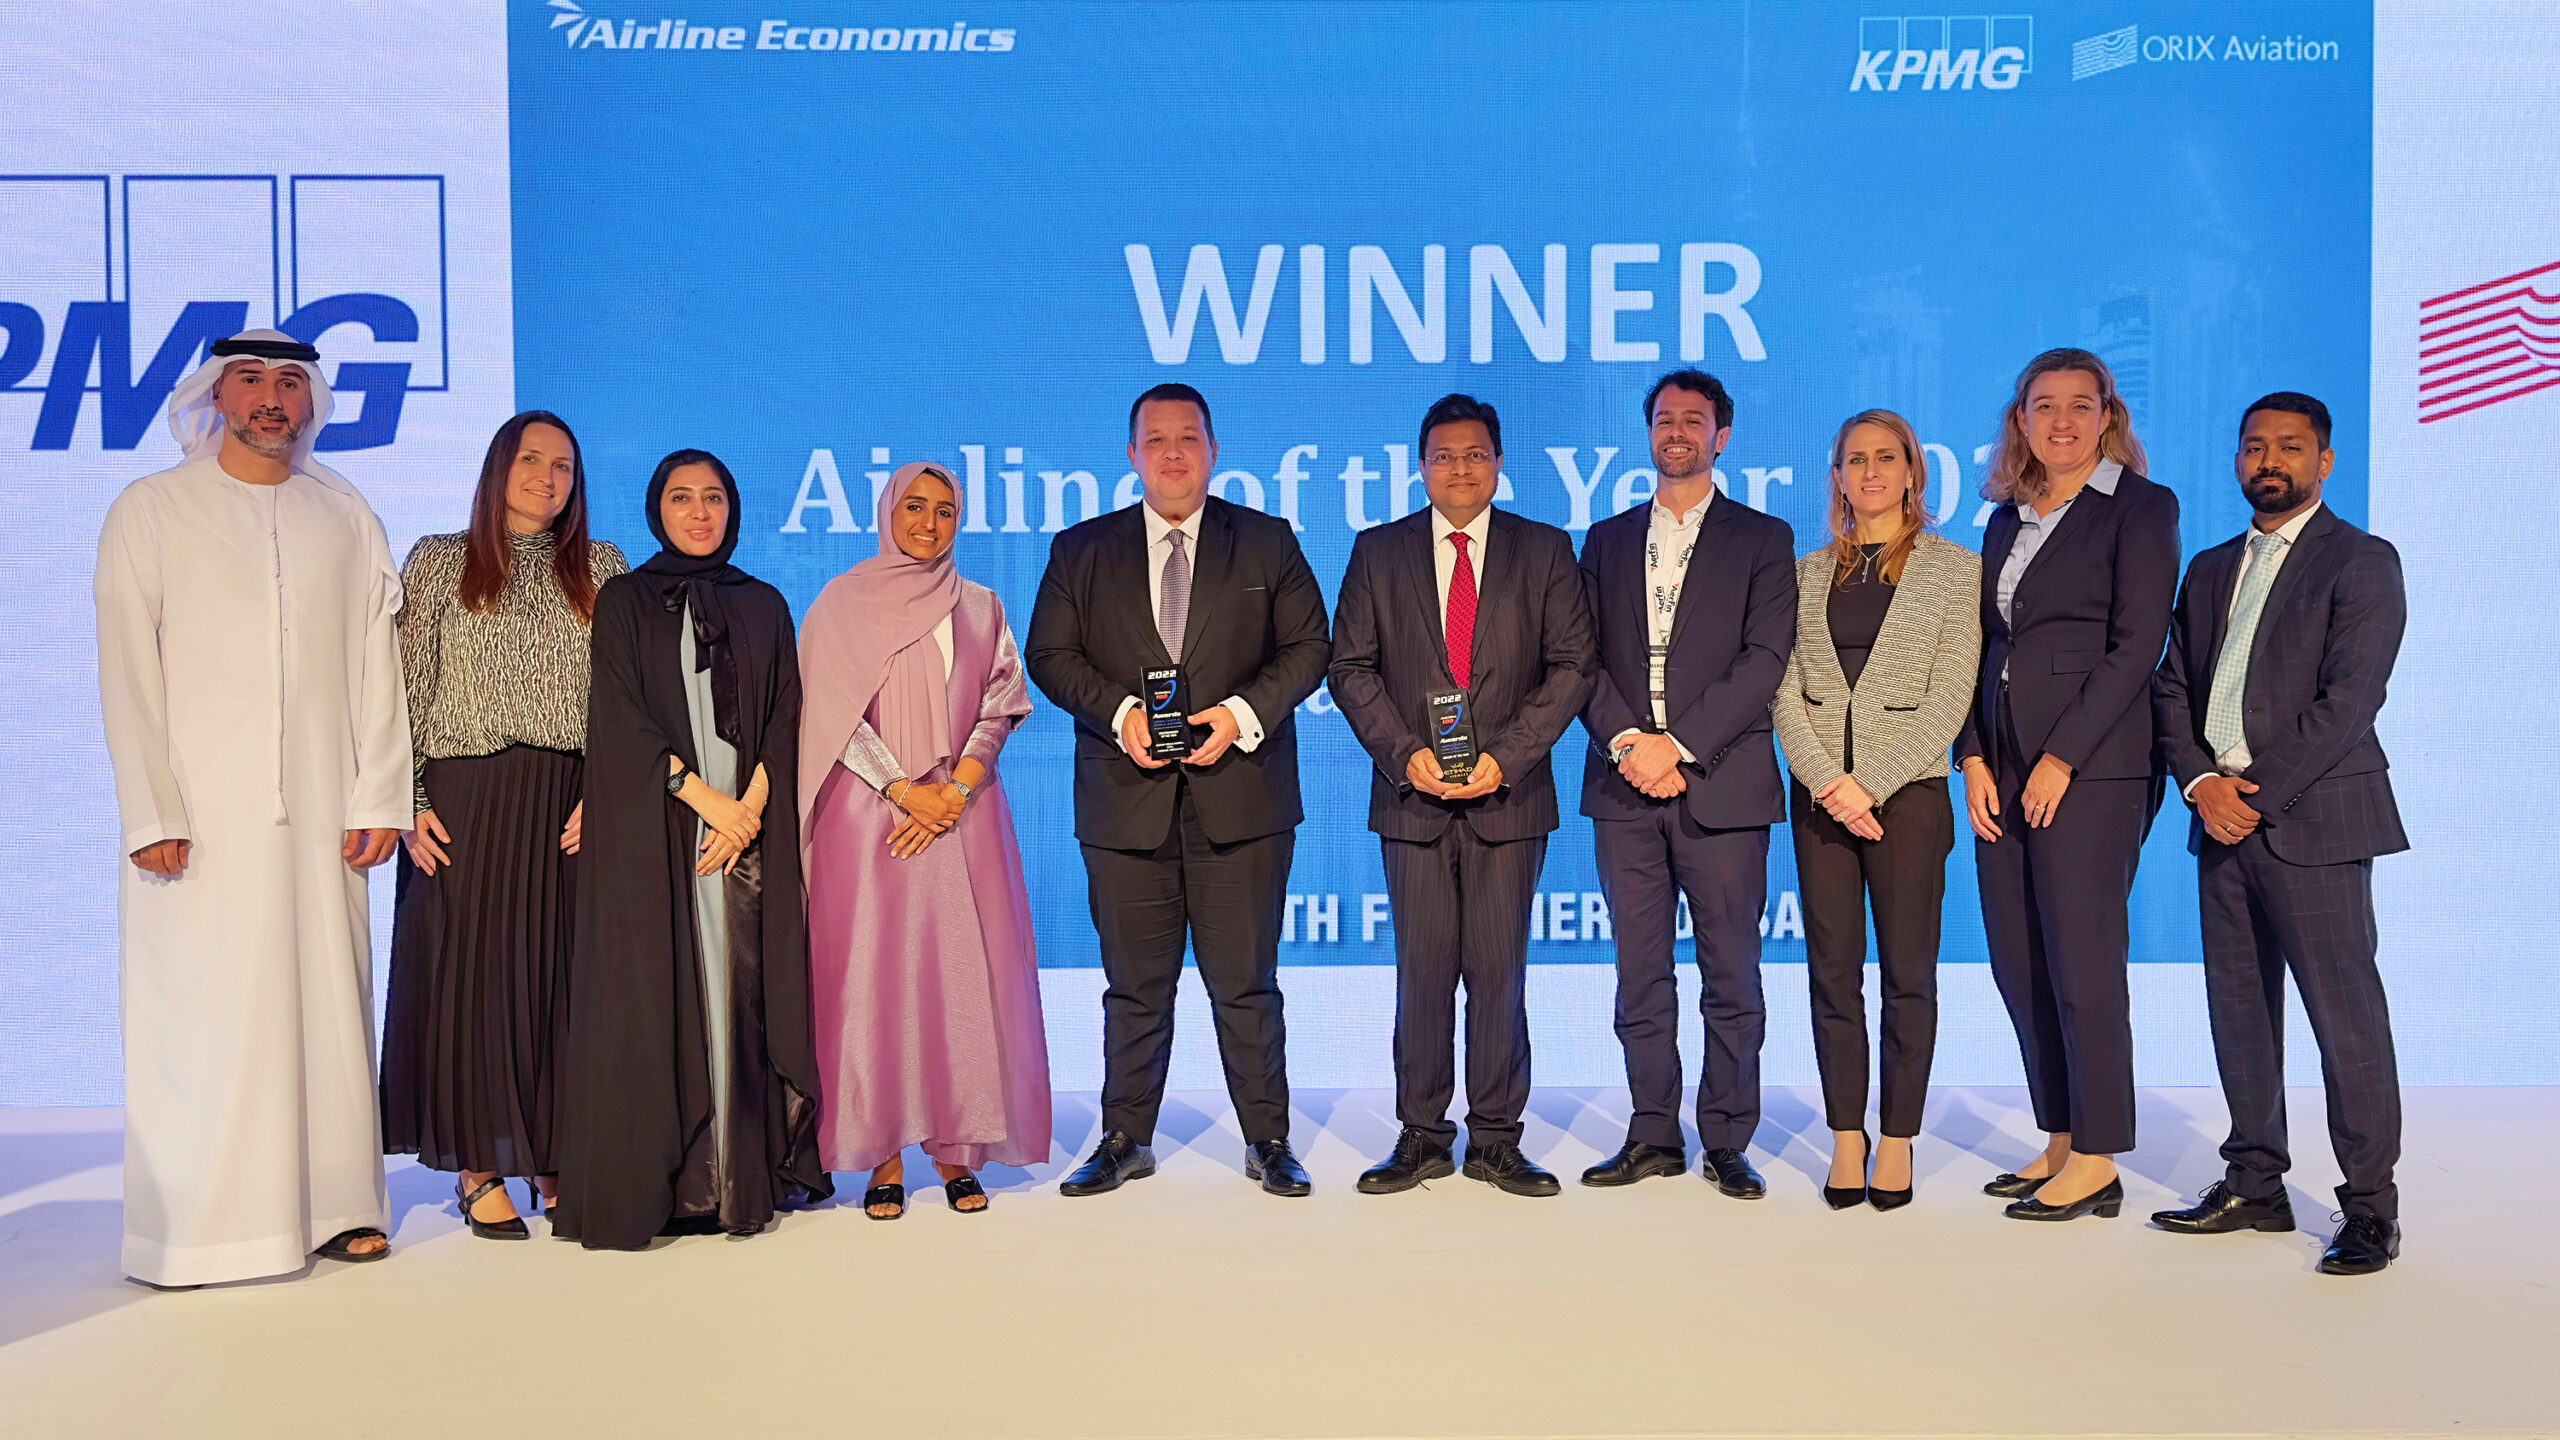 Adam Boukadida, CFO, and the Etihad team celebrate the airline's awards